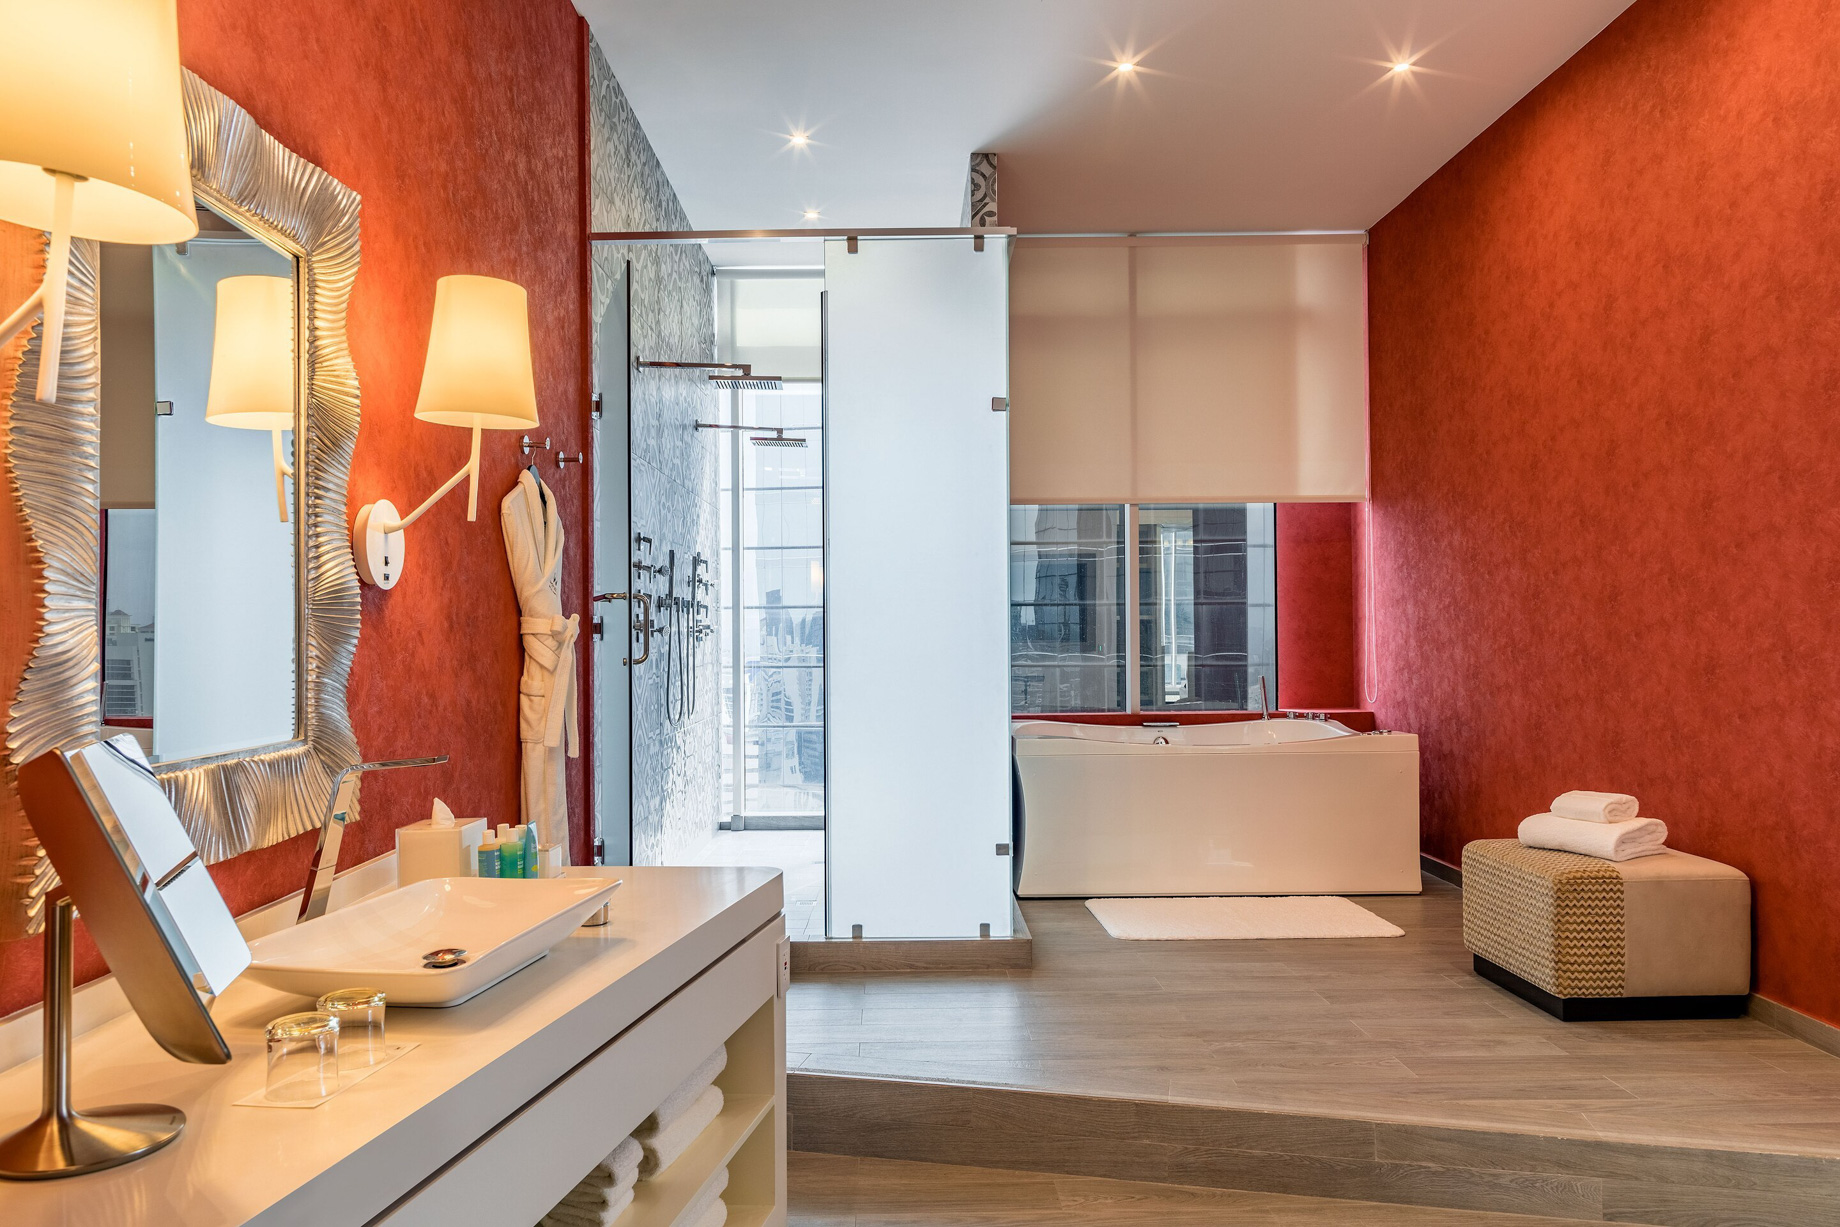 W Panama Hotel – Panama City, Panama – Suite Bathroom Deluxe Walk In Shower